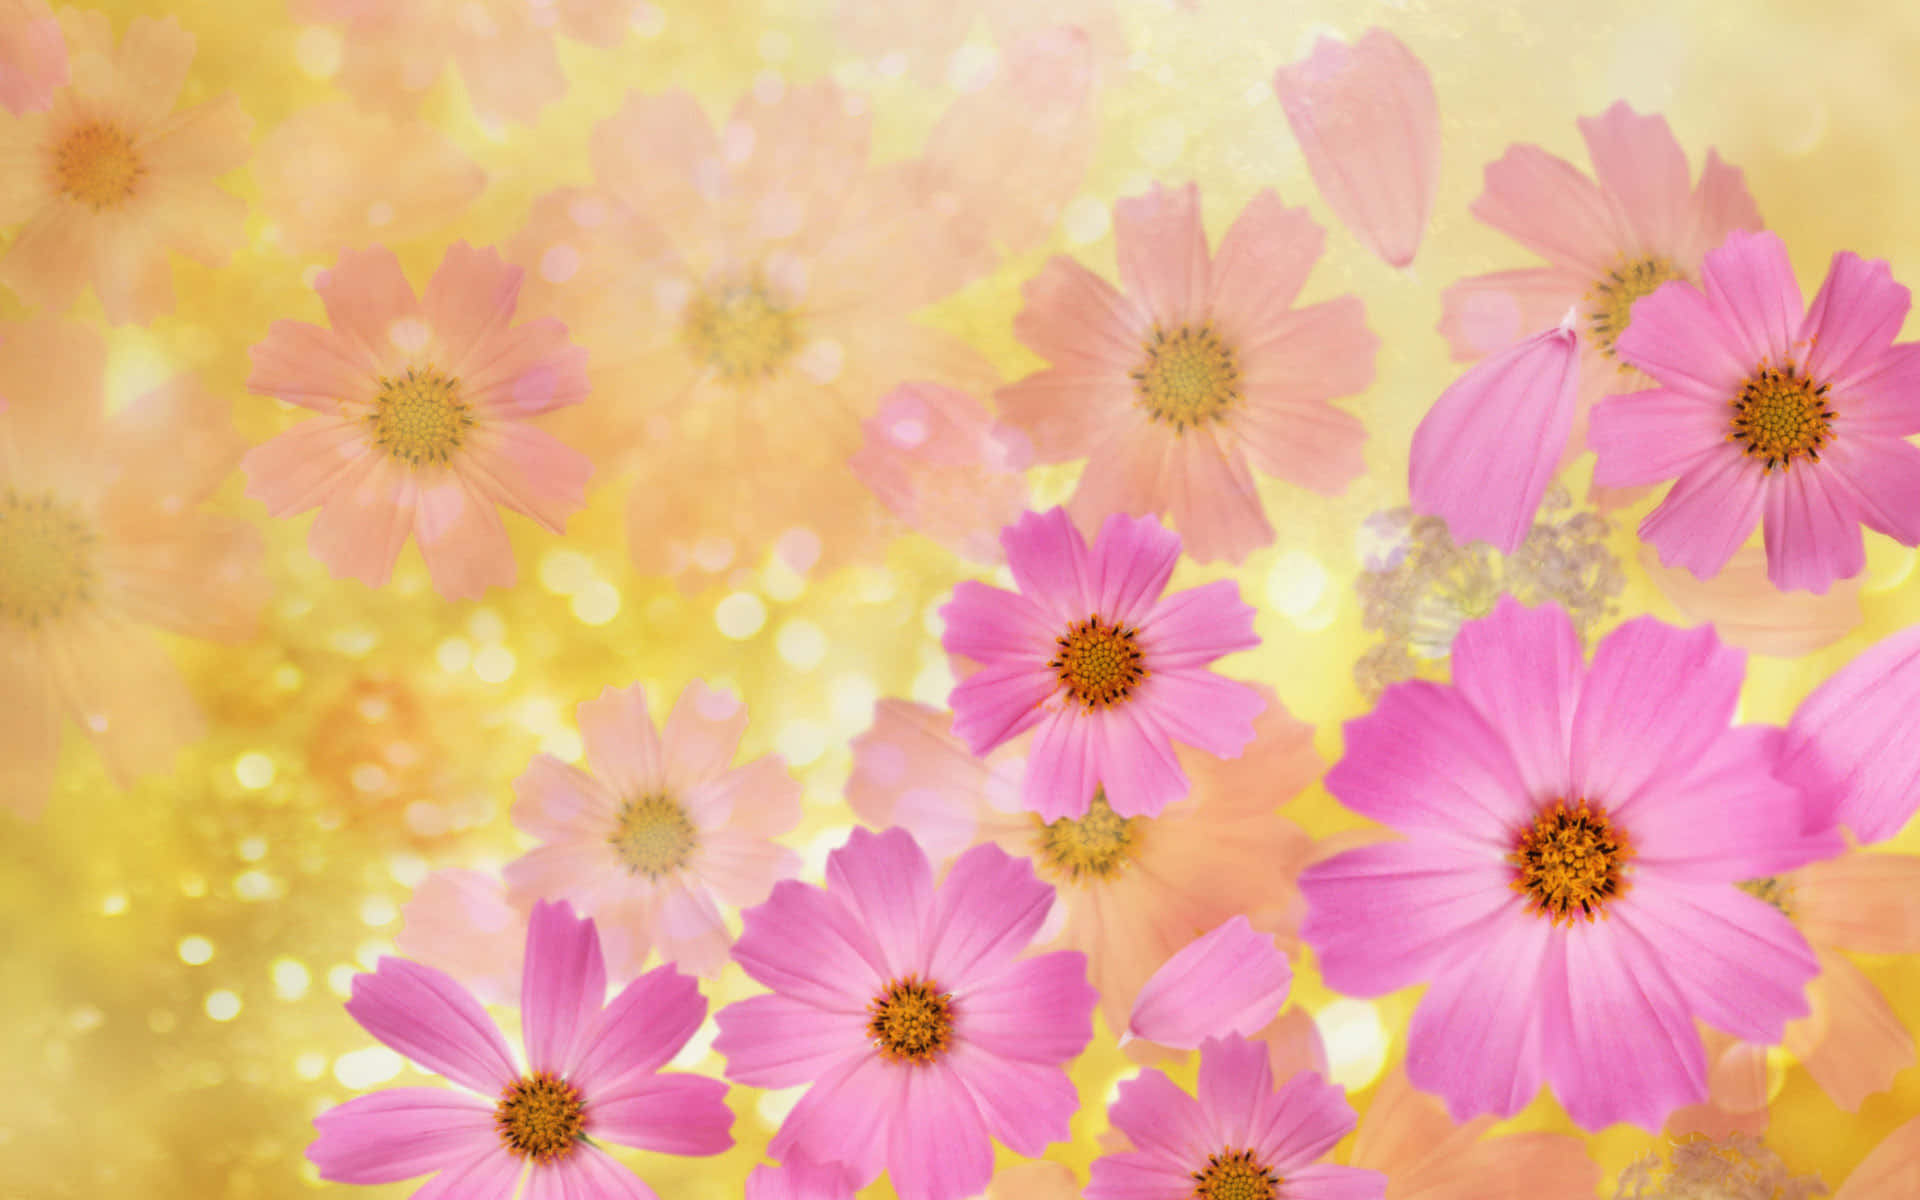 Caption: Blossoming Spring Flower Background